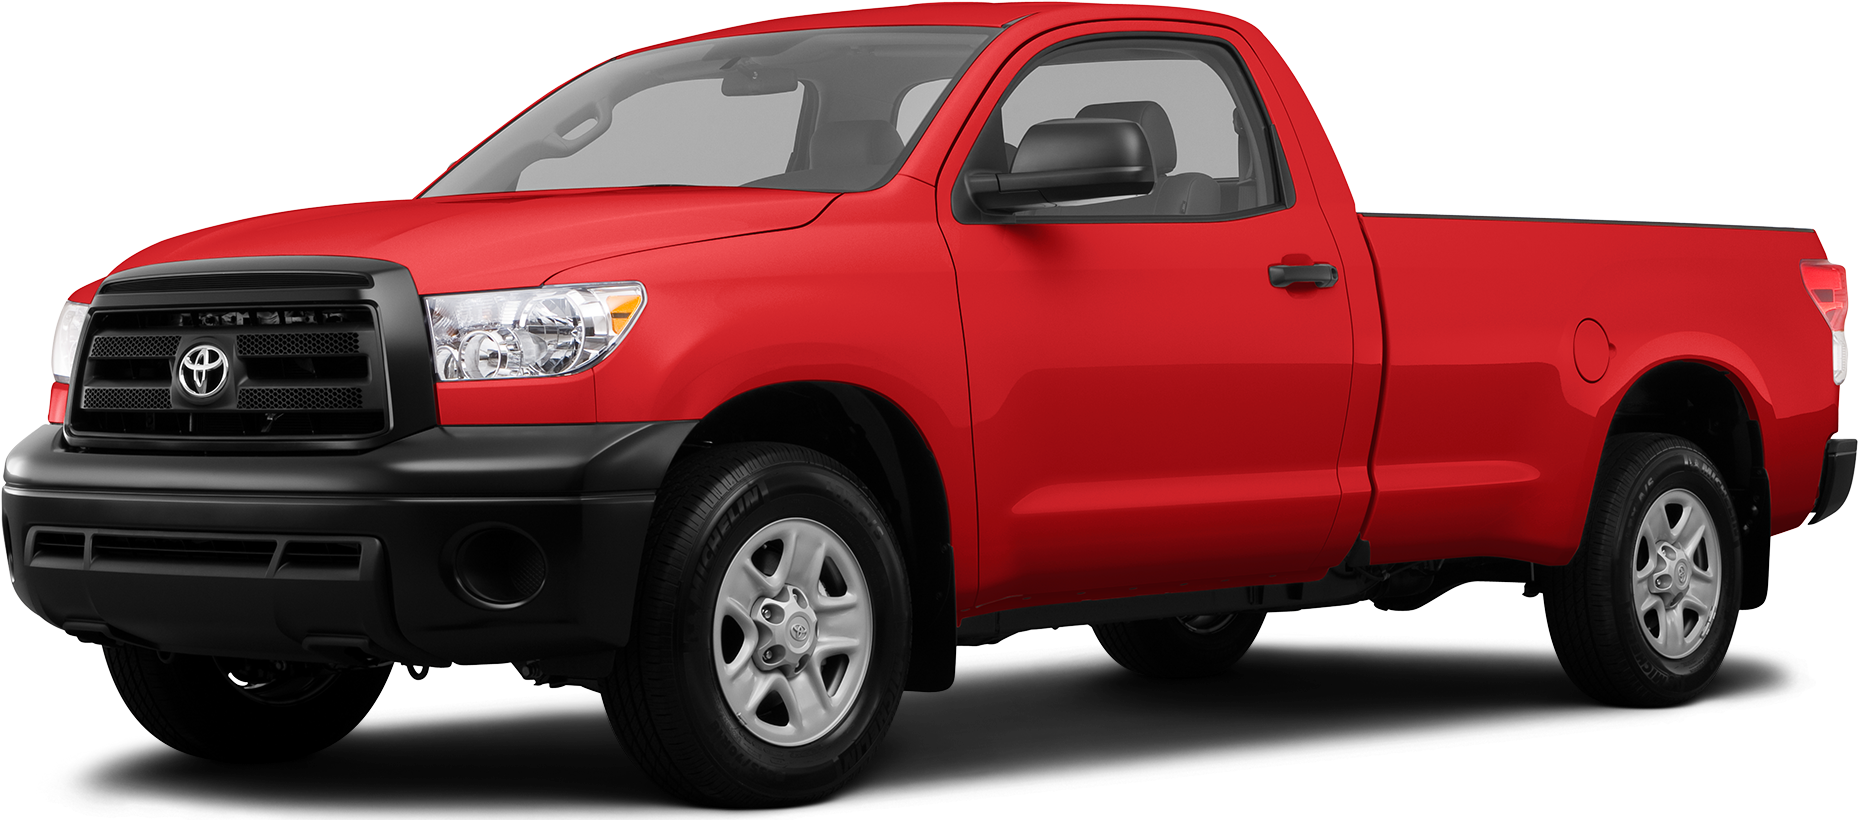 2013 Toyota Tundra Spark Plug Replacement Guide – SparkPlugWorld